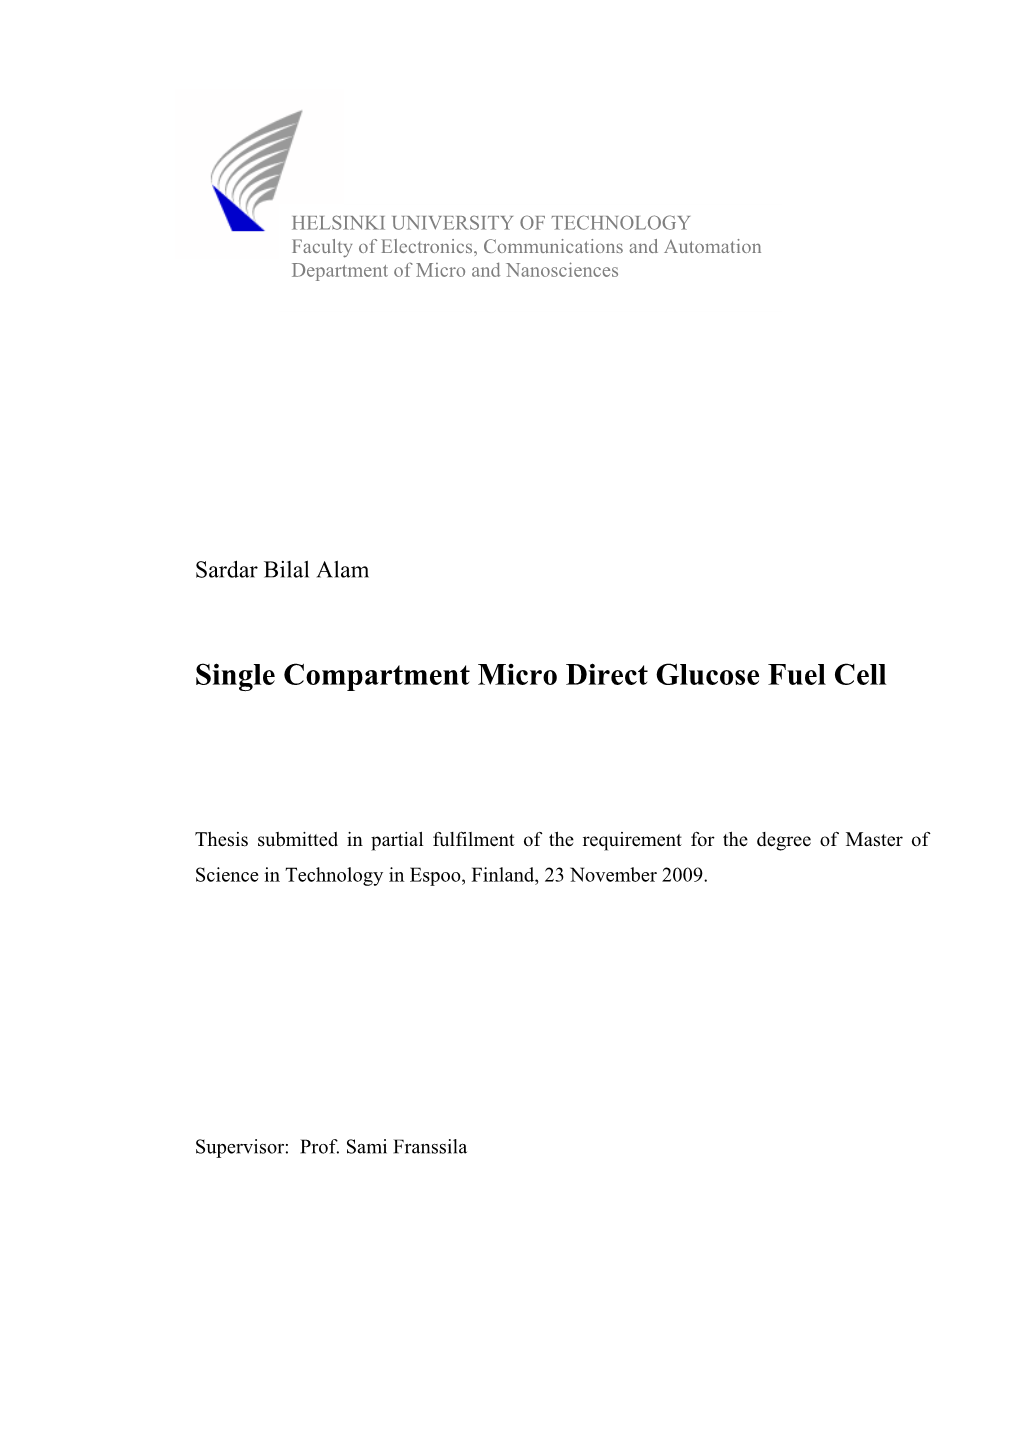 Single Compartment Micro Direct Glucose Fuel Cell